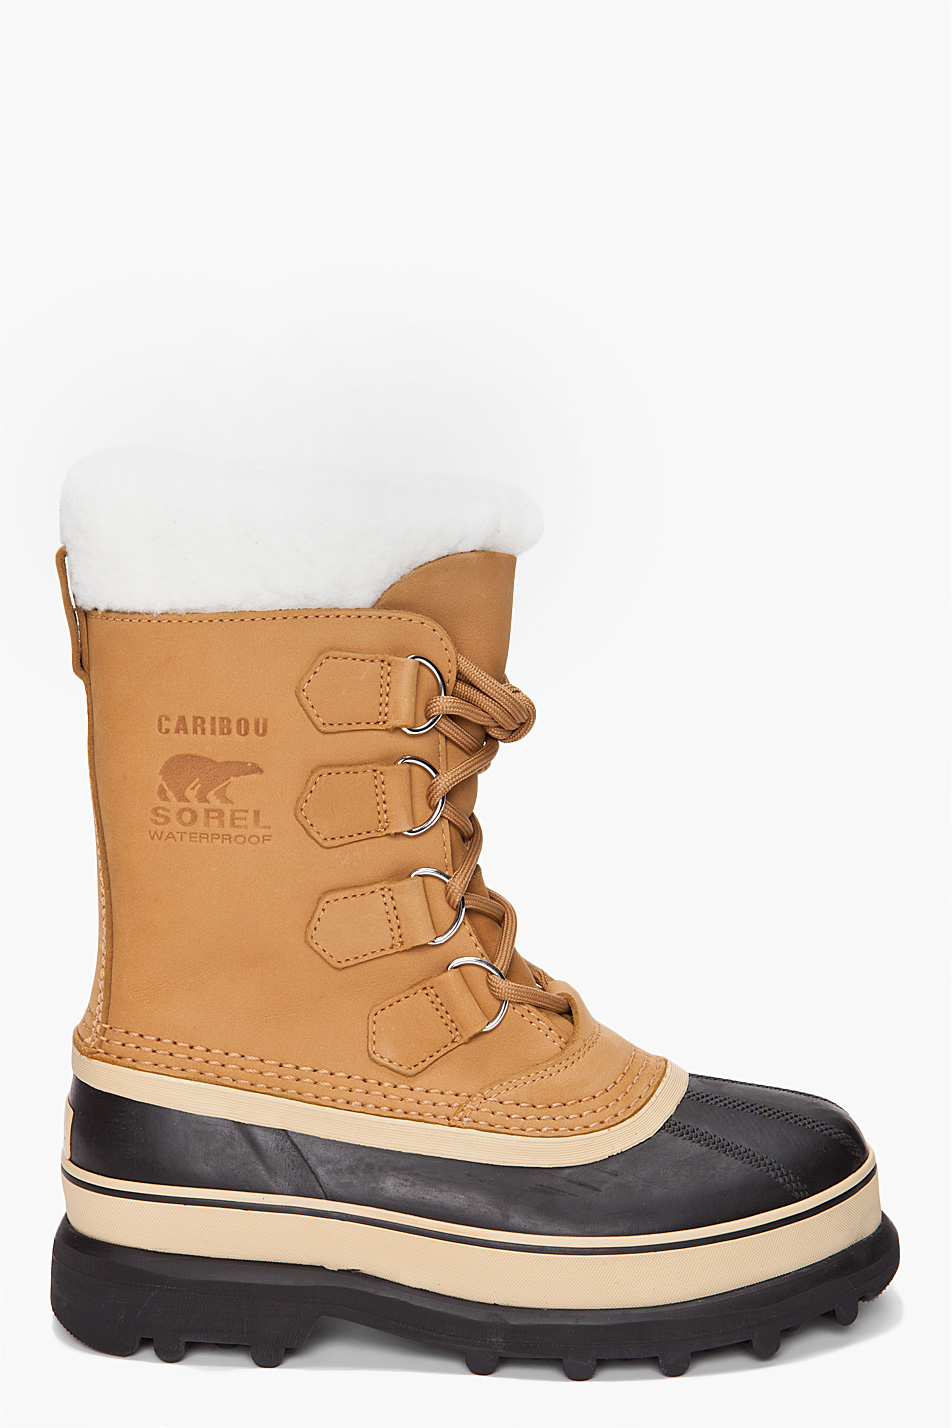 Sorel The Caribou Boot in Buff in Brown (tan) | Lyst